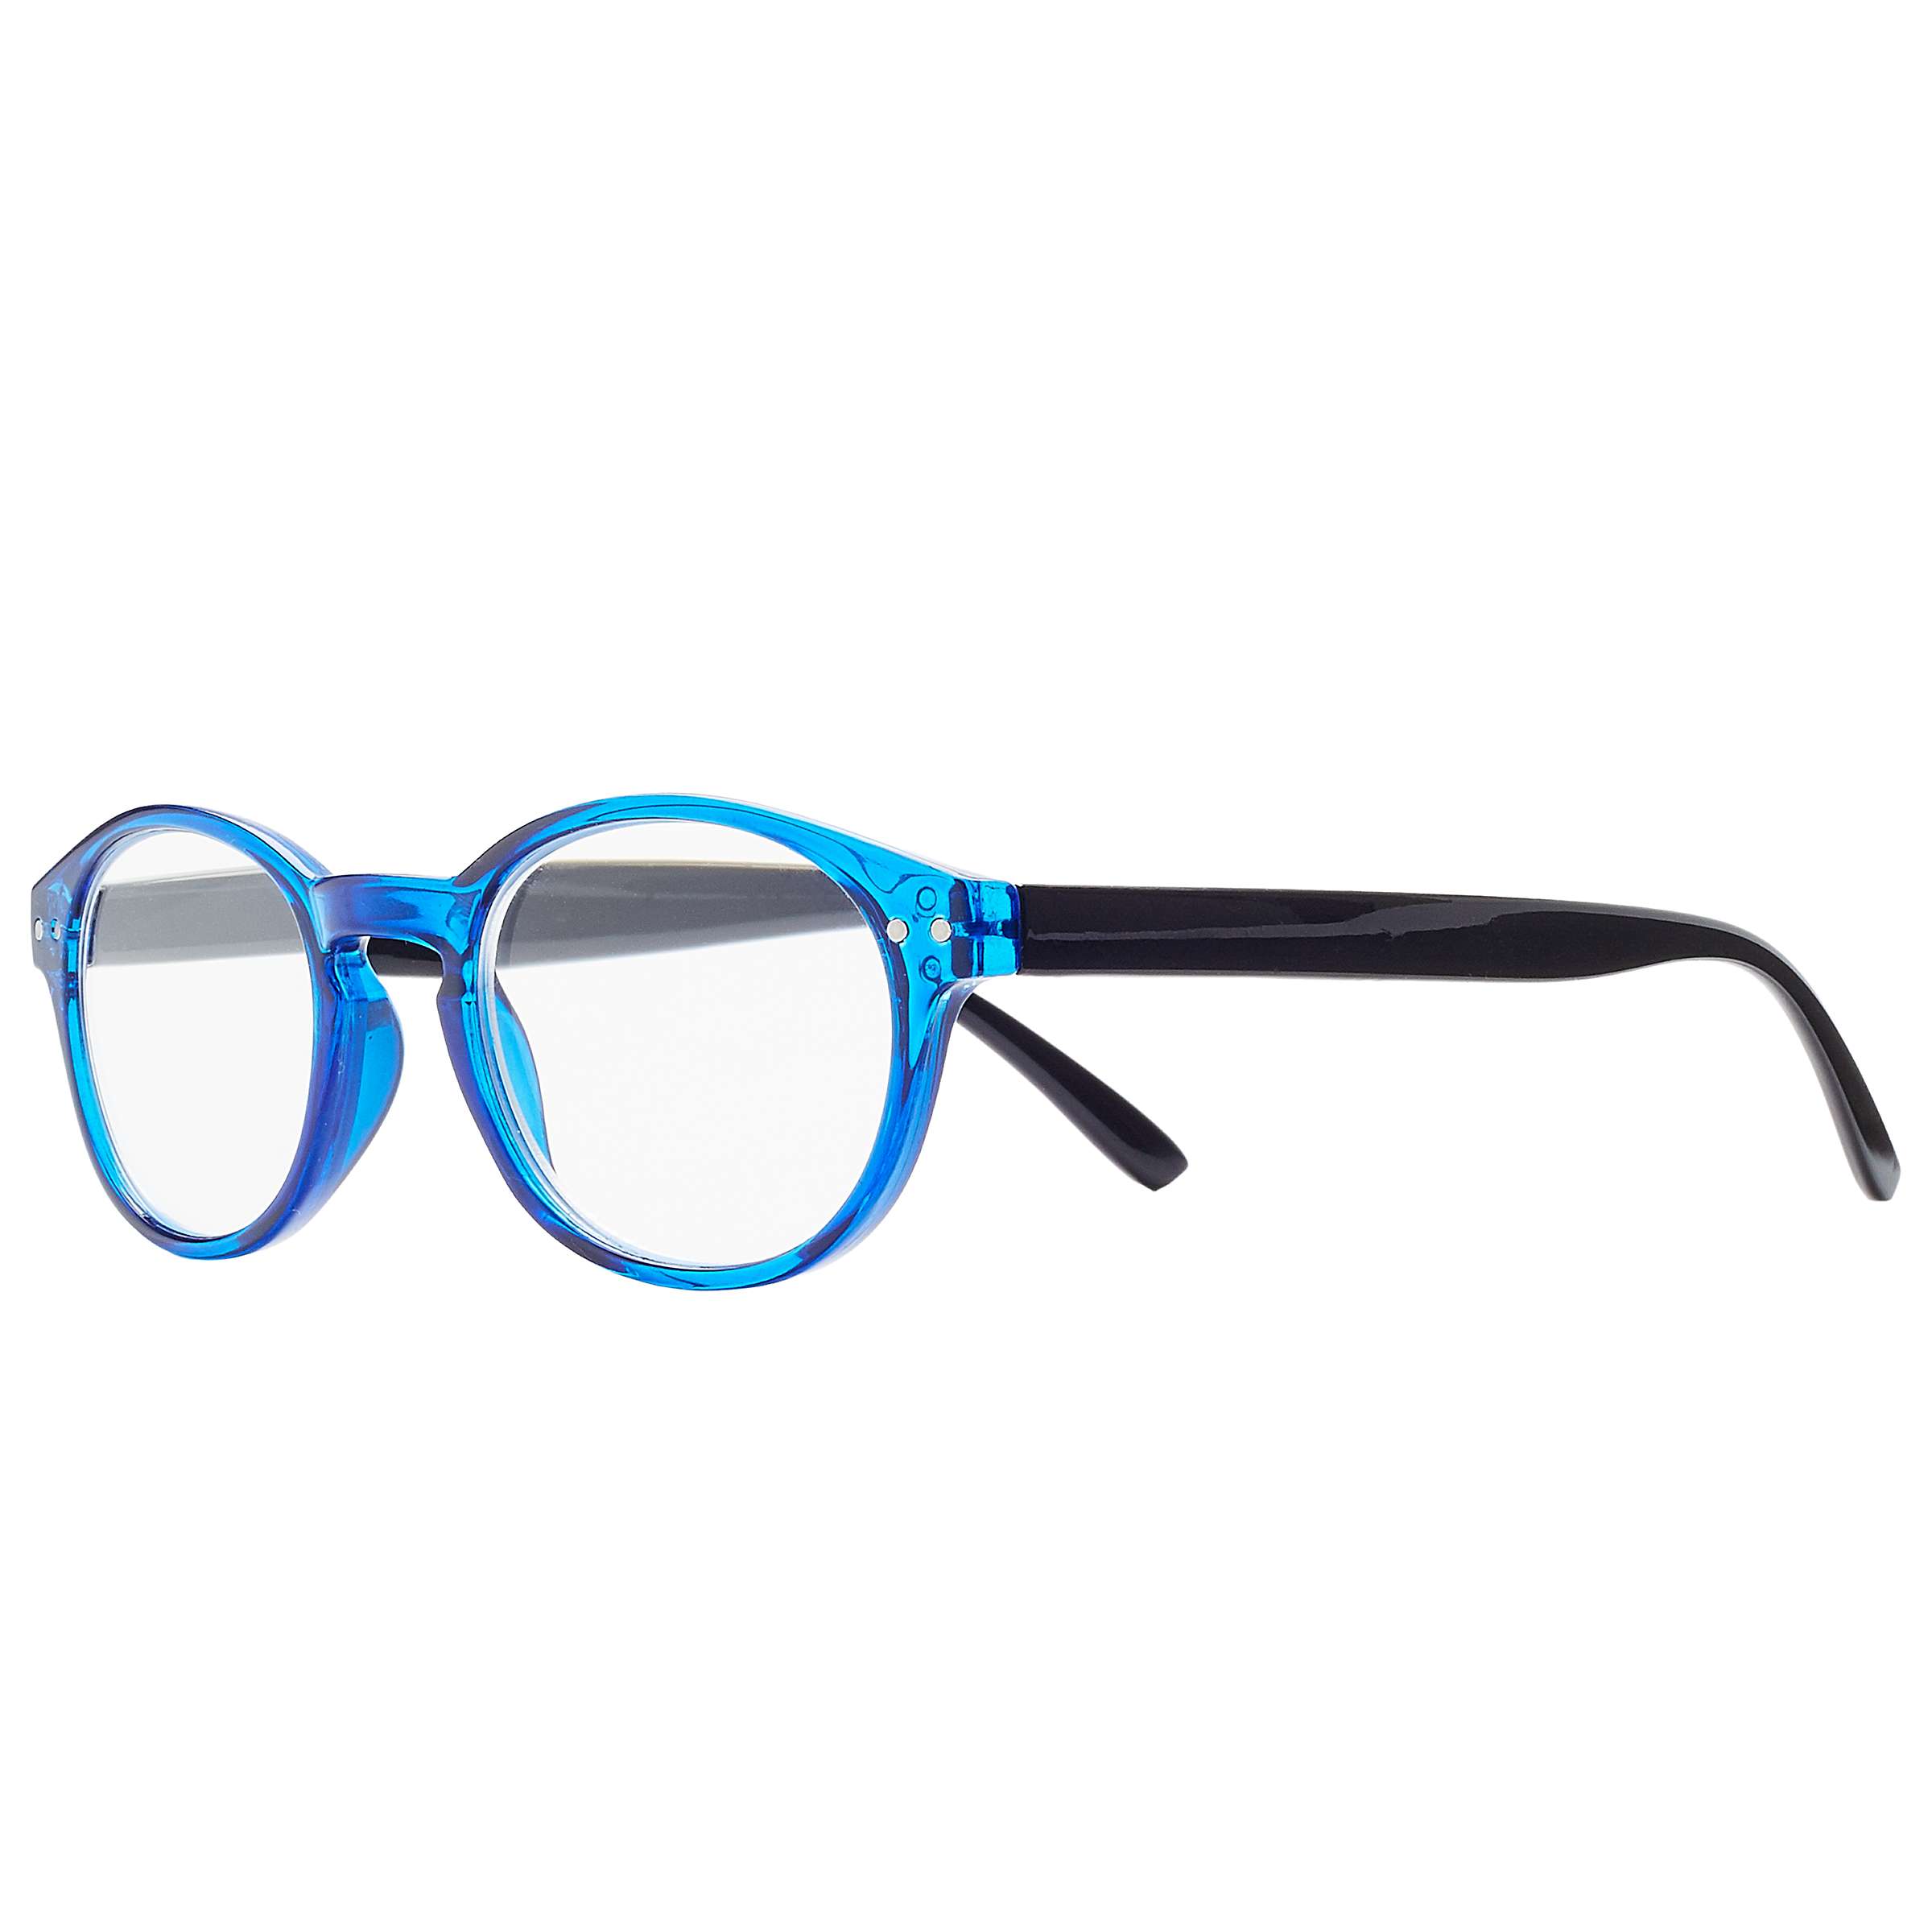 Buy Magnif Eyes Very Narrow Fit Ready Readers St Louis Glasses, Cobalt/Black Online at johnlewis.com